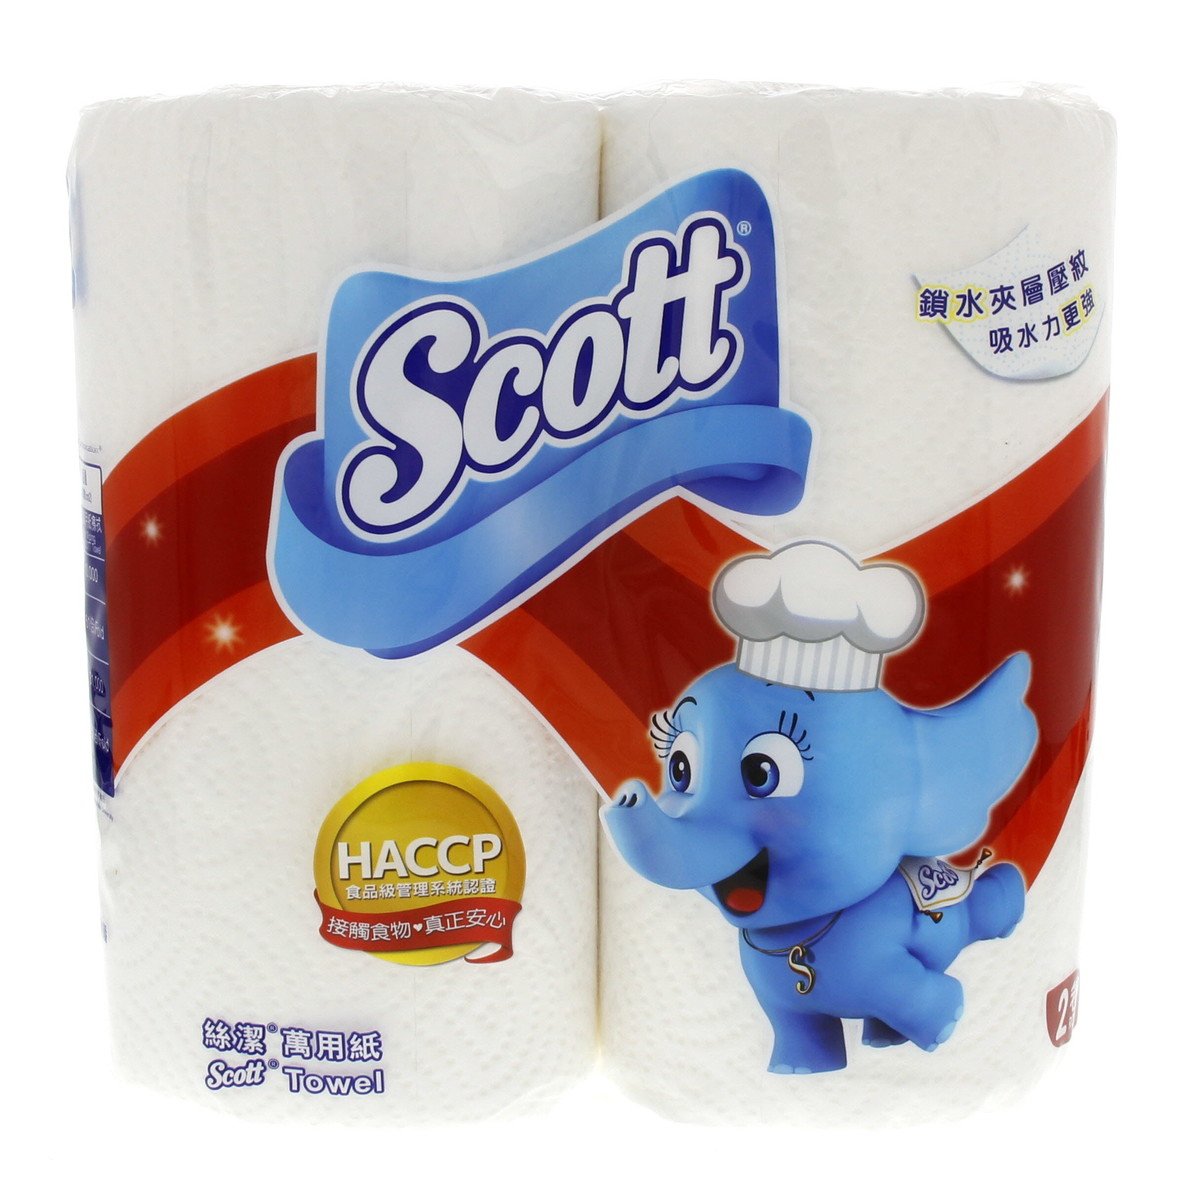 Scott Towels 2 Rolls